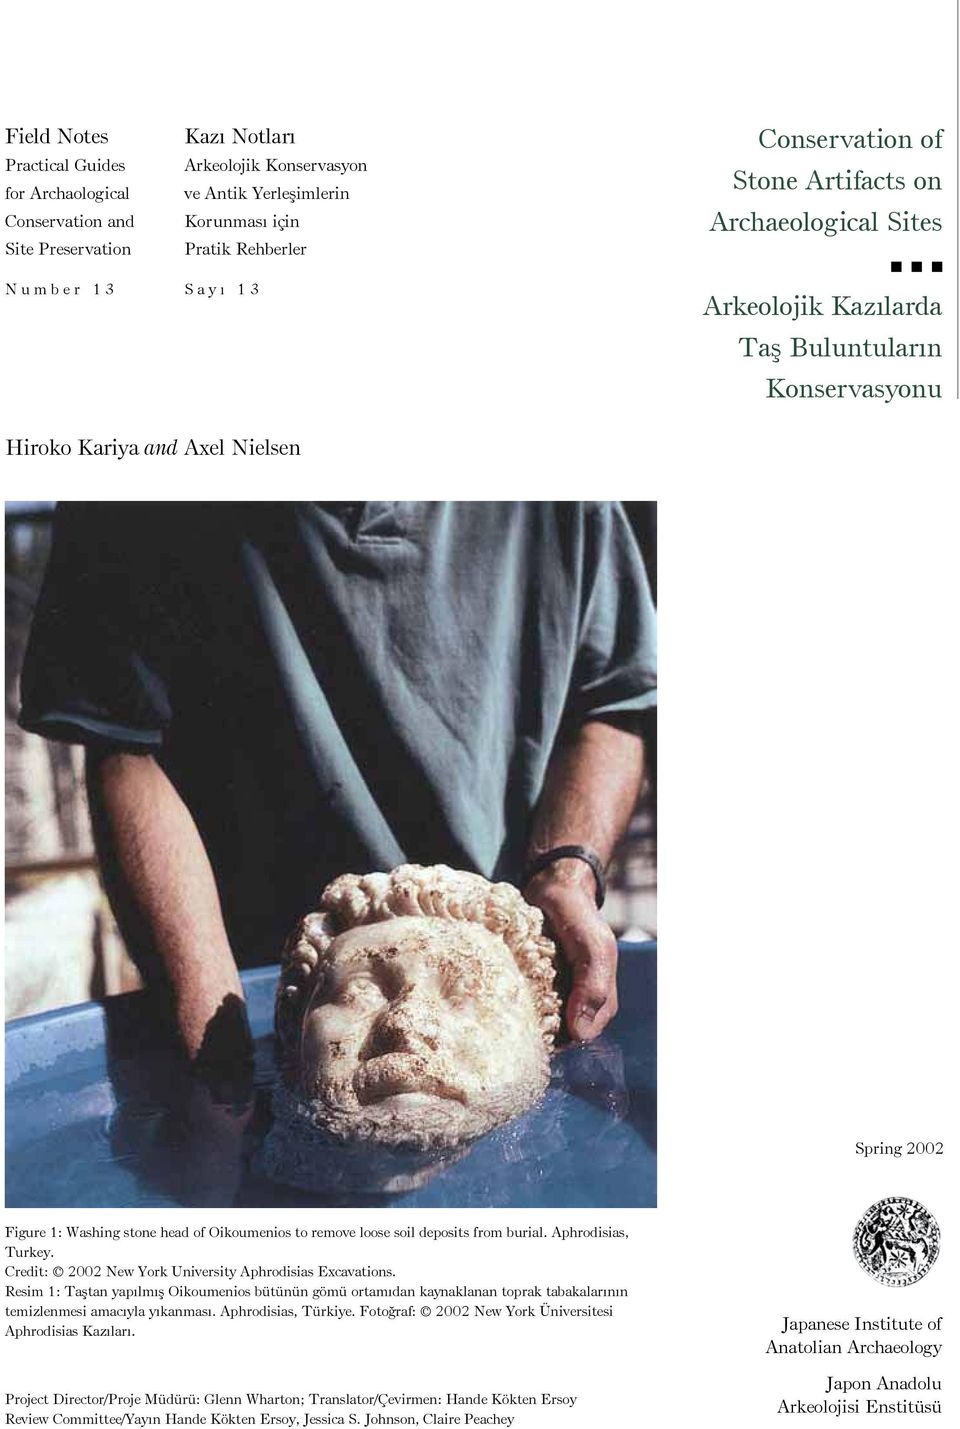 remove loose soil deposits from burial. Aphrodisias, Turkey. Credit: 2002 New York University Aphrodisias Excavations.